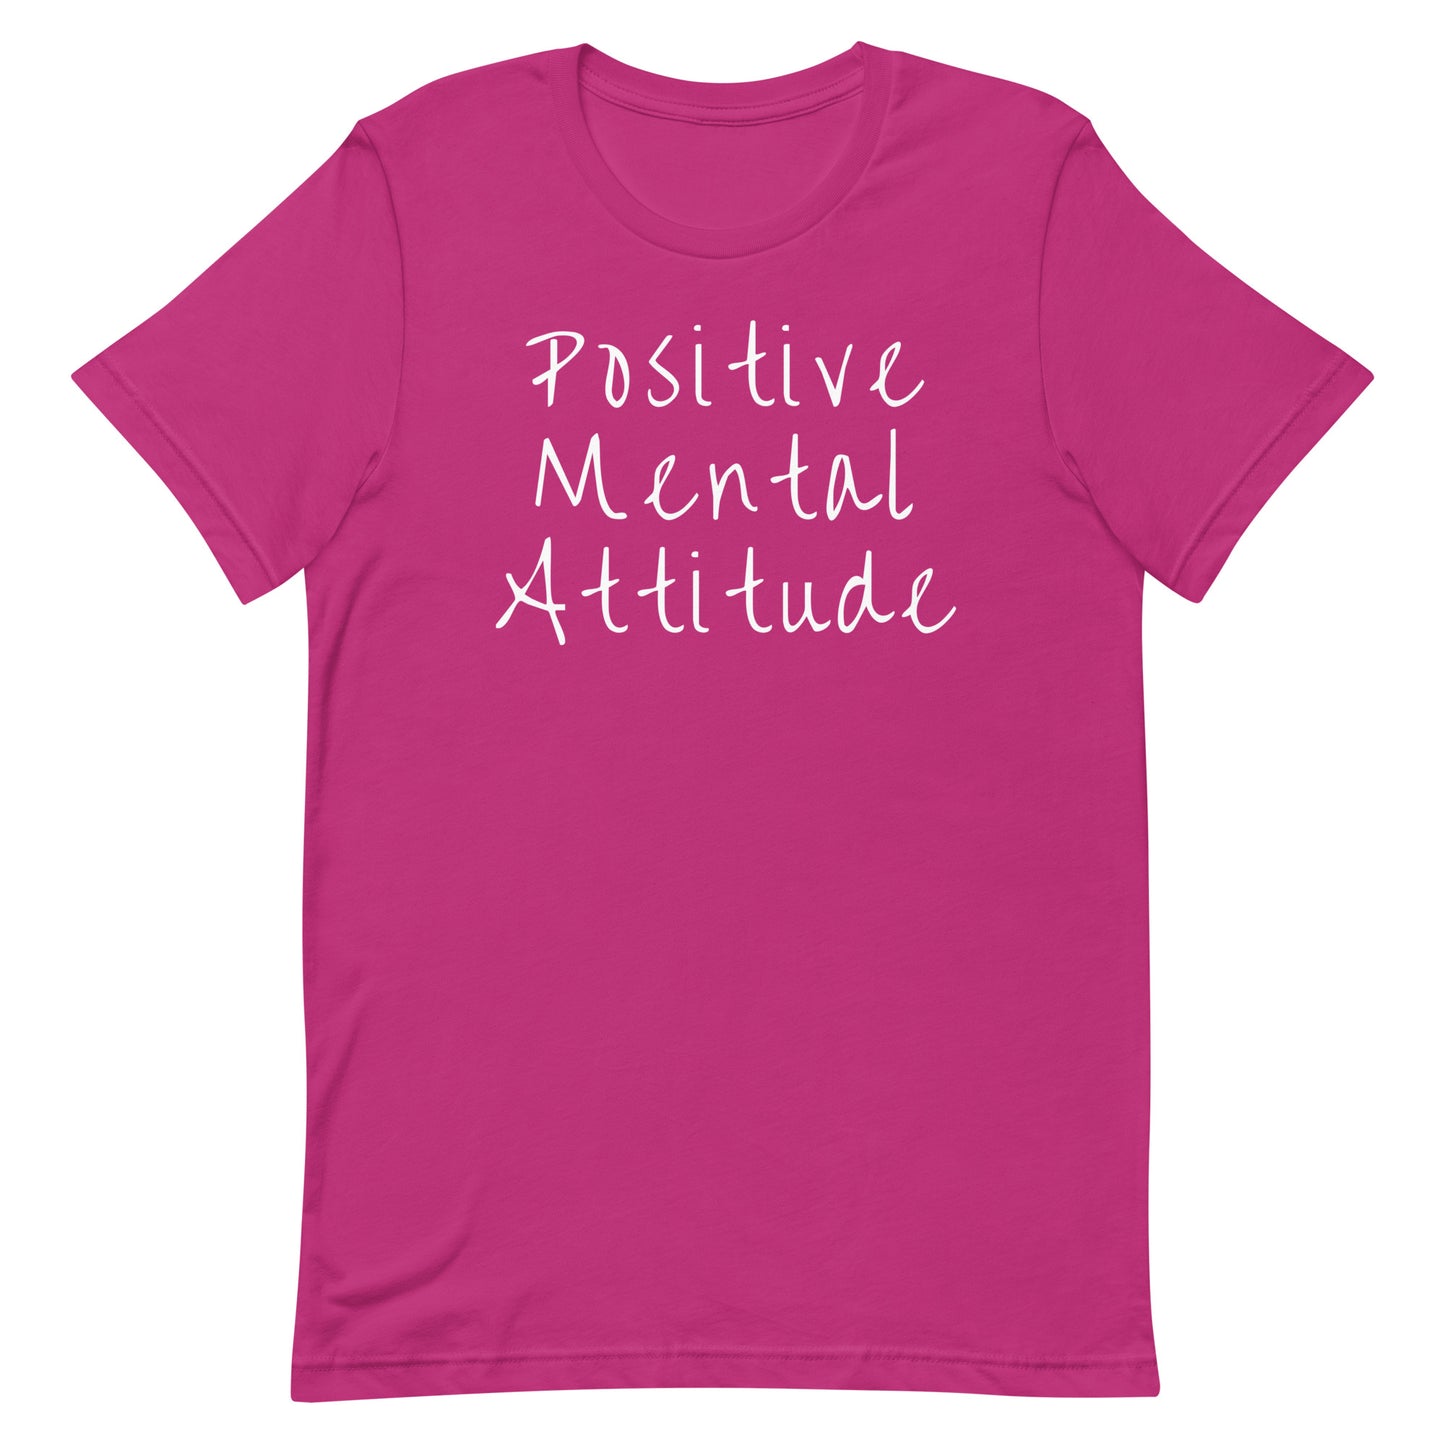 Positive Mental Attitude. Unisex t-shirt